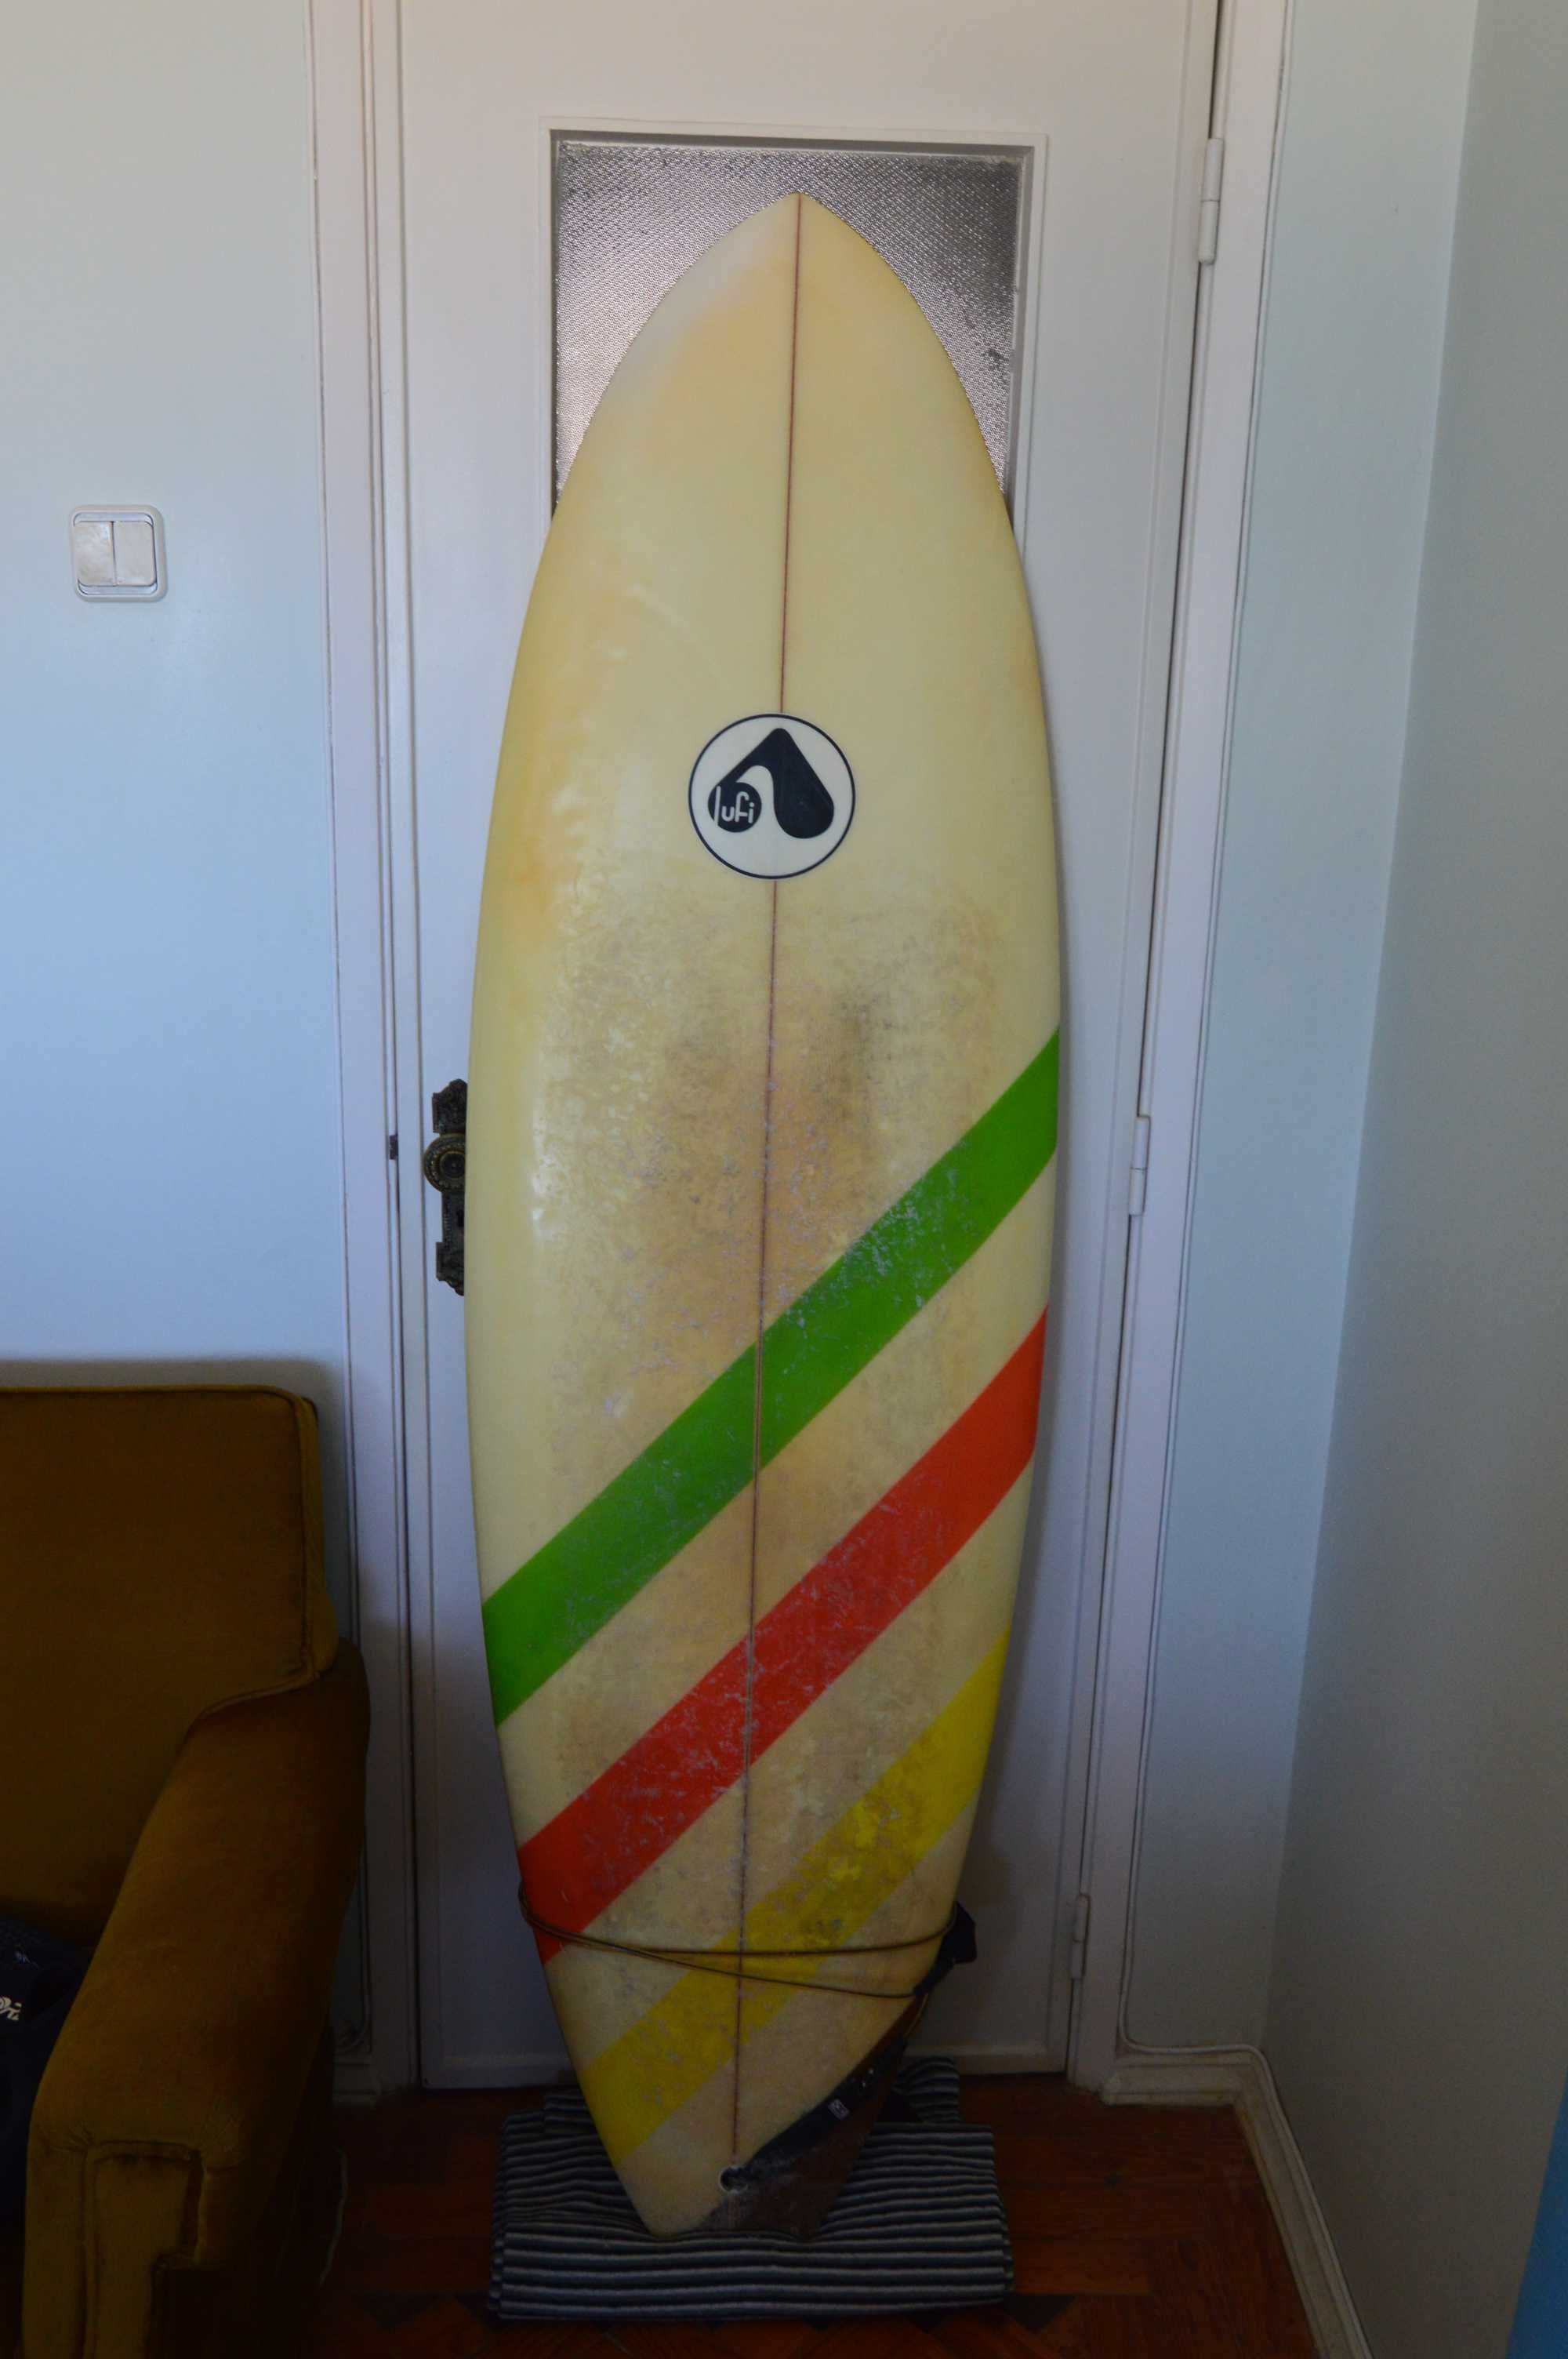 Prancha de Surf Lufi 6.2